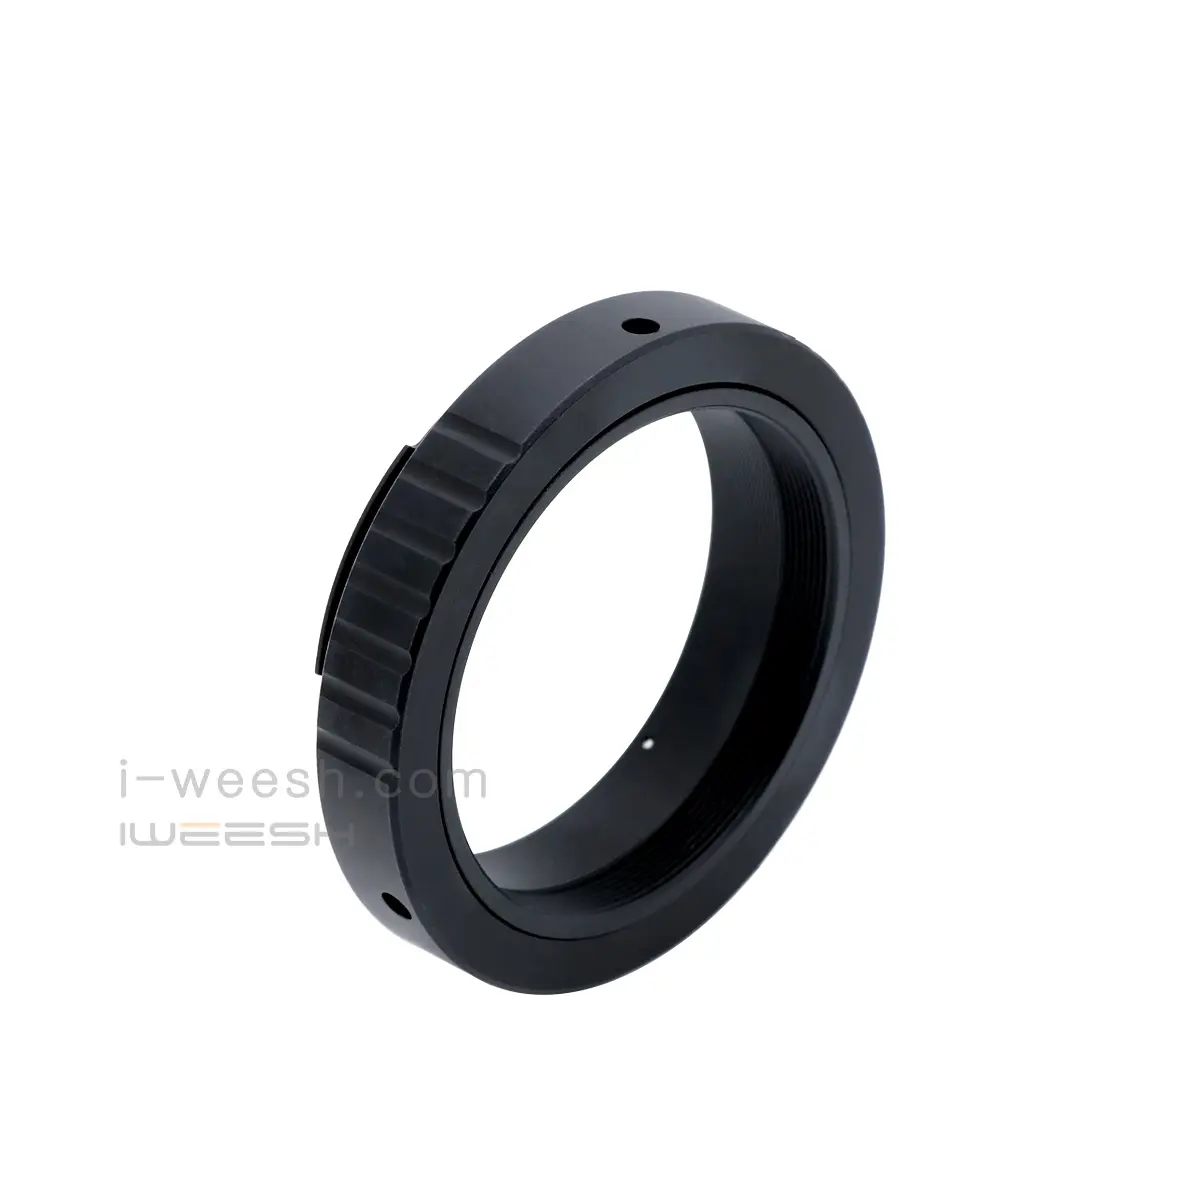 M48 * 0.75 Mount Adapter Ring Telescope Eyepiece Lens für Canon EOS Camera DSLR Cam Len Accessories